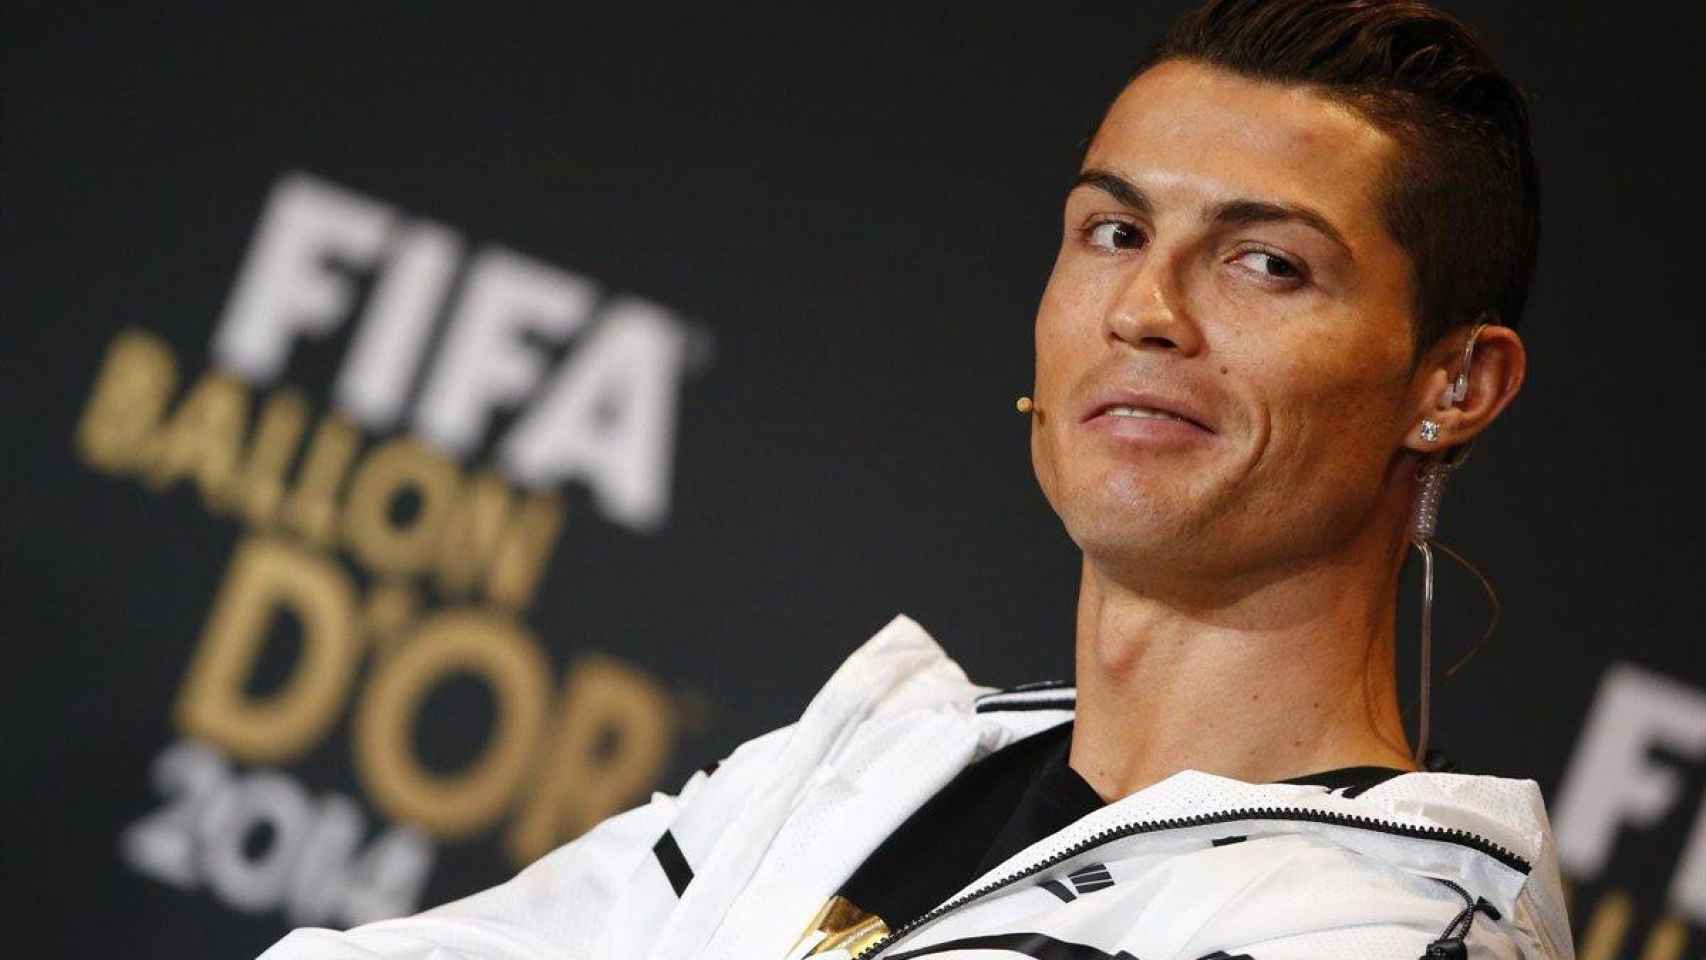 El futbolista Cristiano Ronaldo / EP